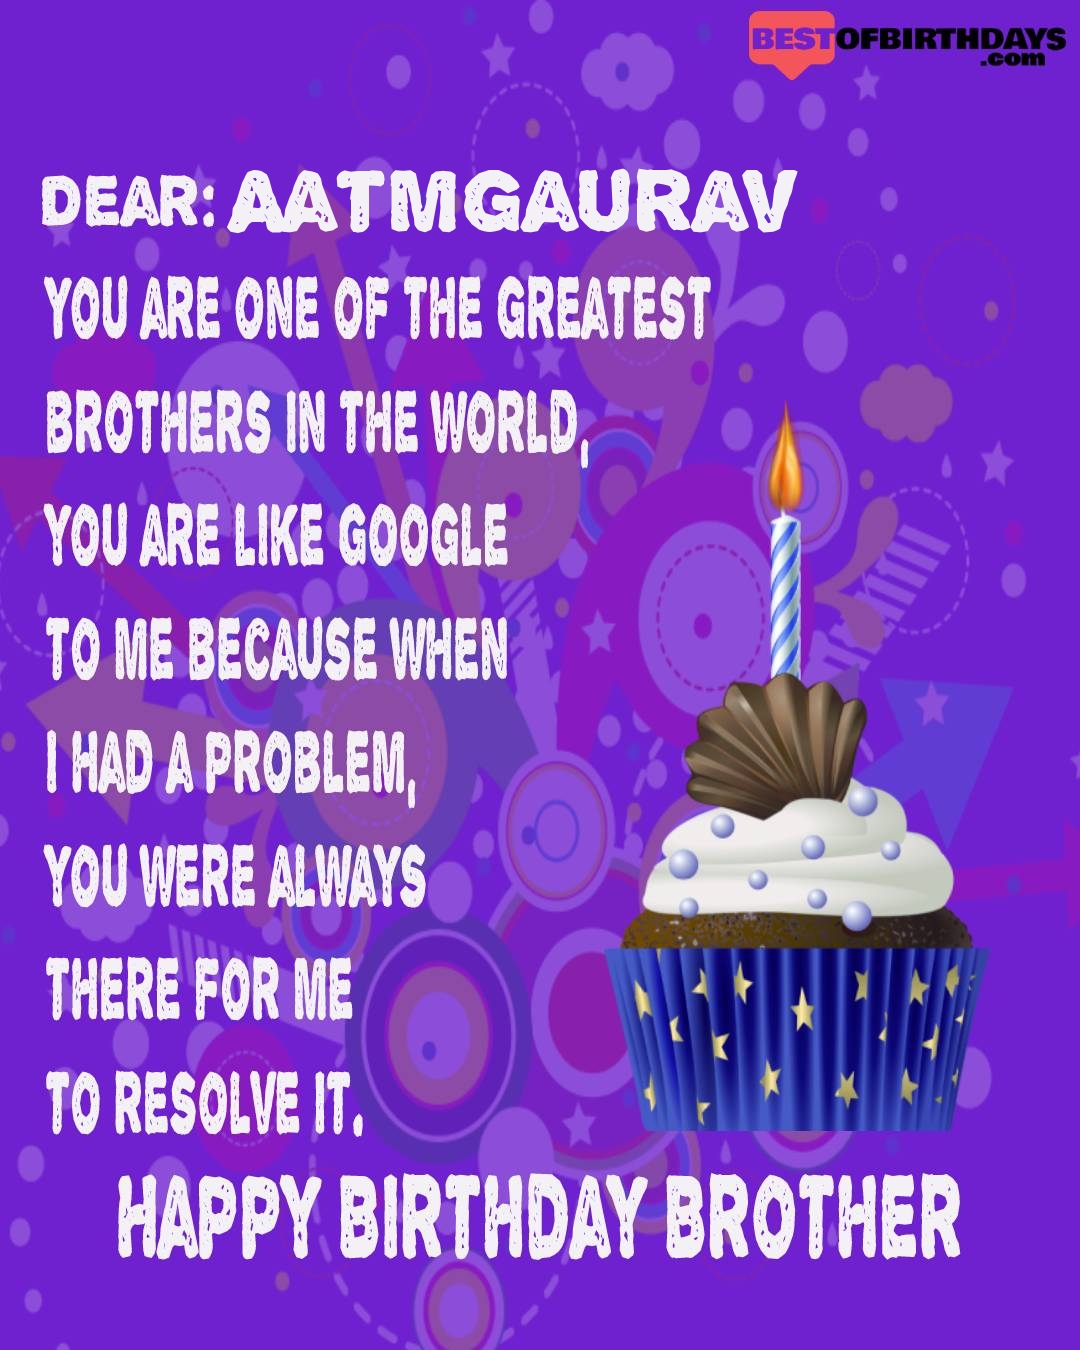 Happy birthday aatmgaurav bhai brother bro